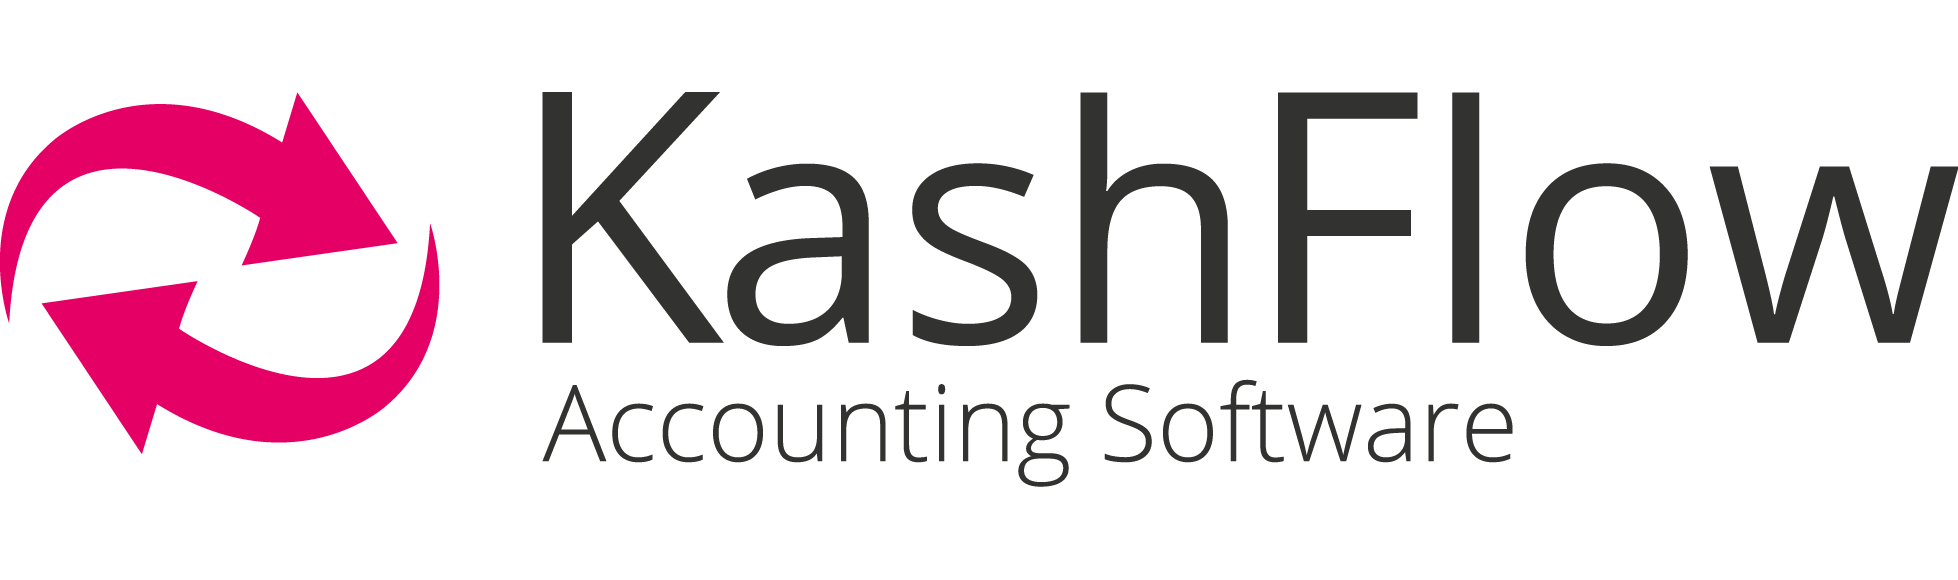 Kashflow Accounting Software